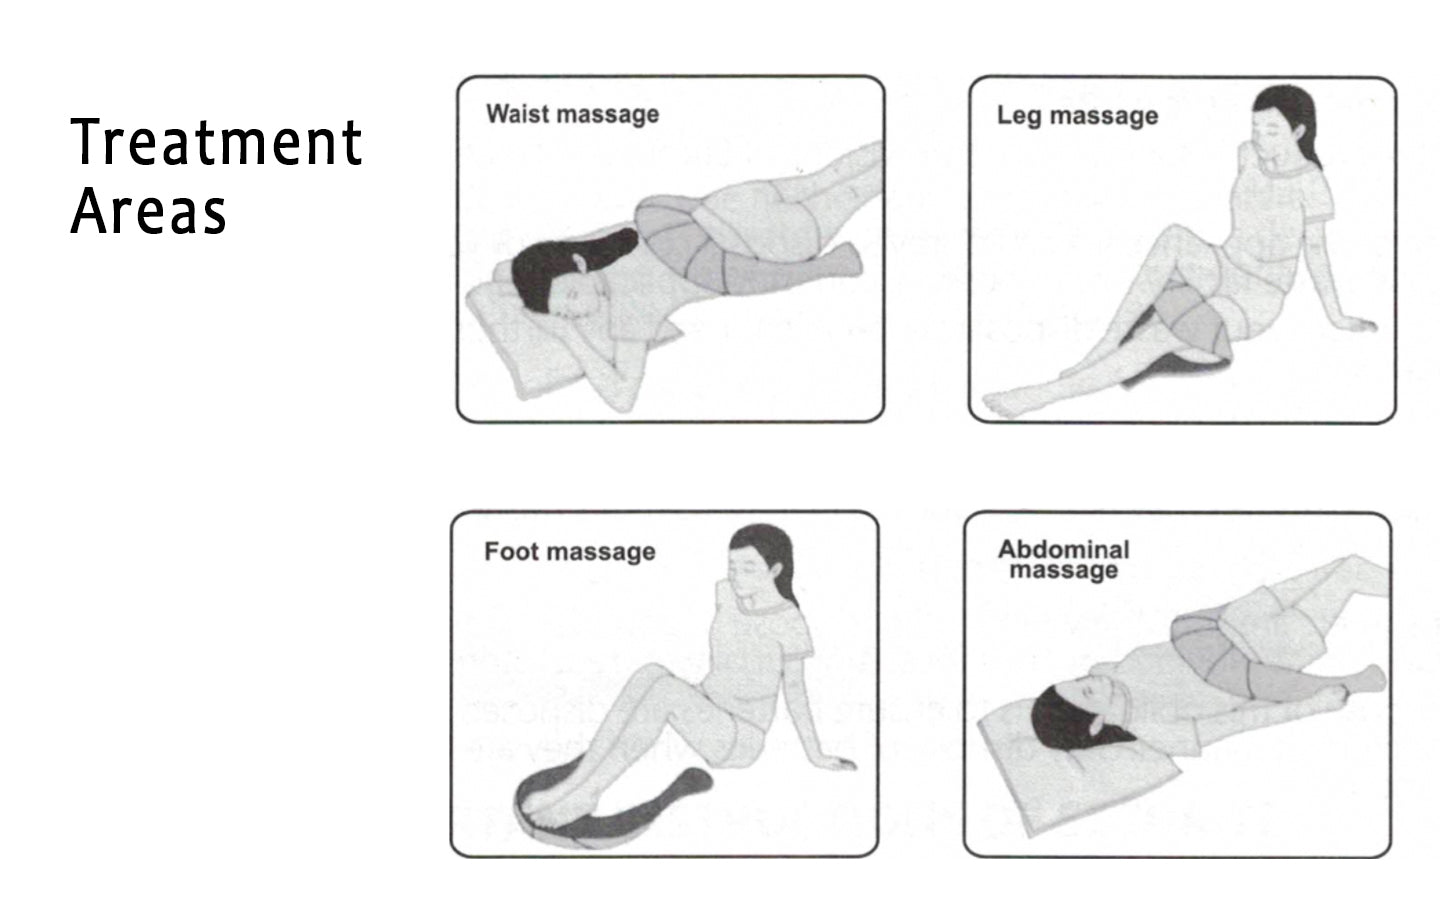 treatment areas, waist massage, leg massage, foot massage, abdominal massage